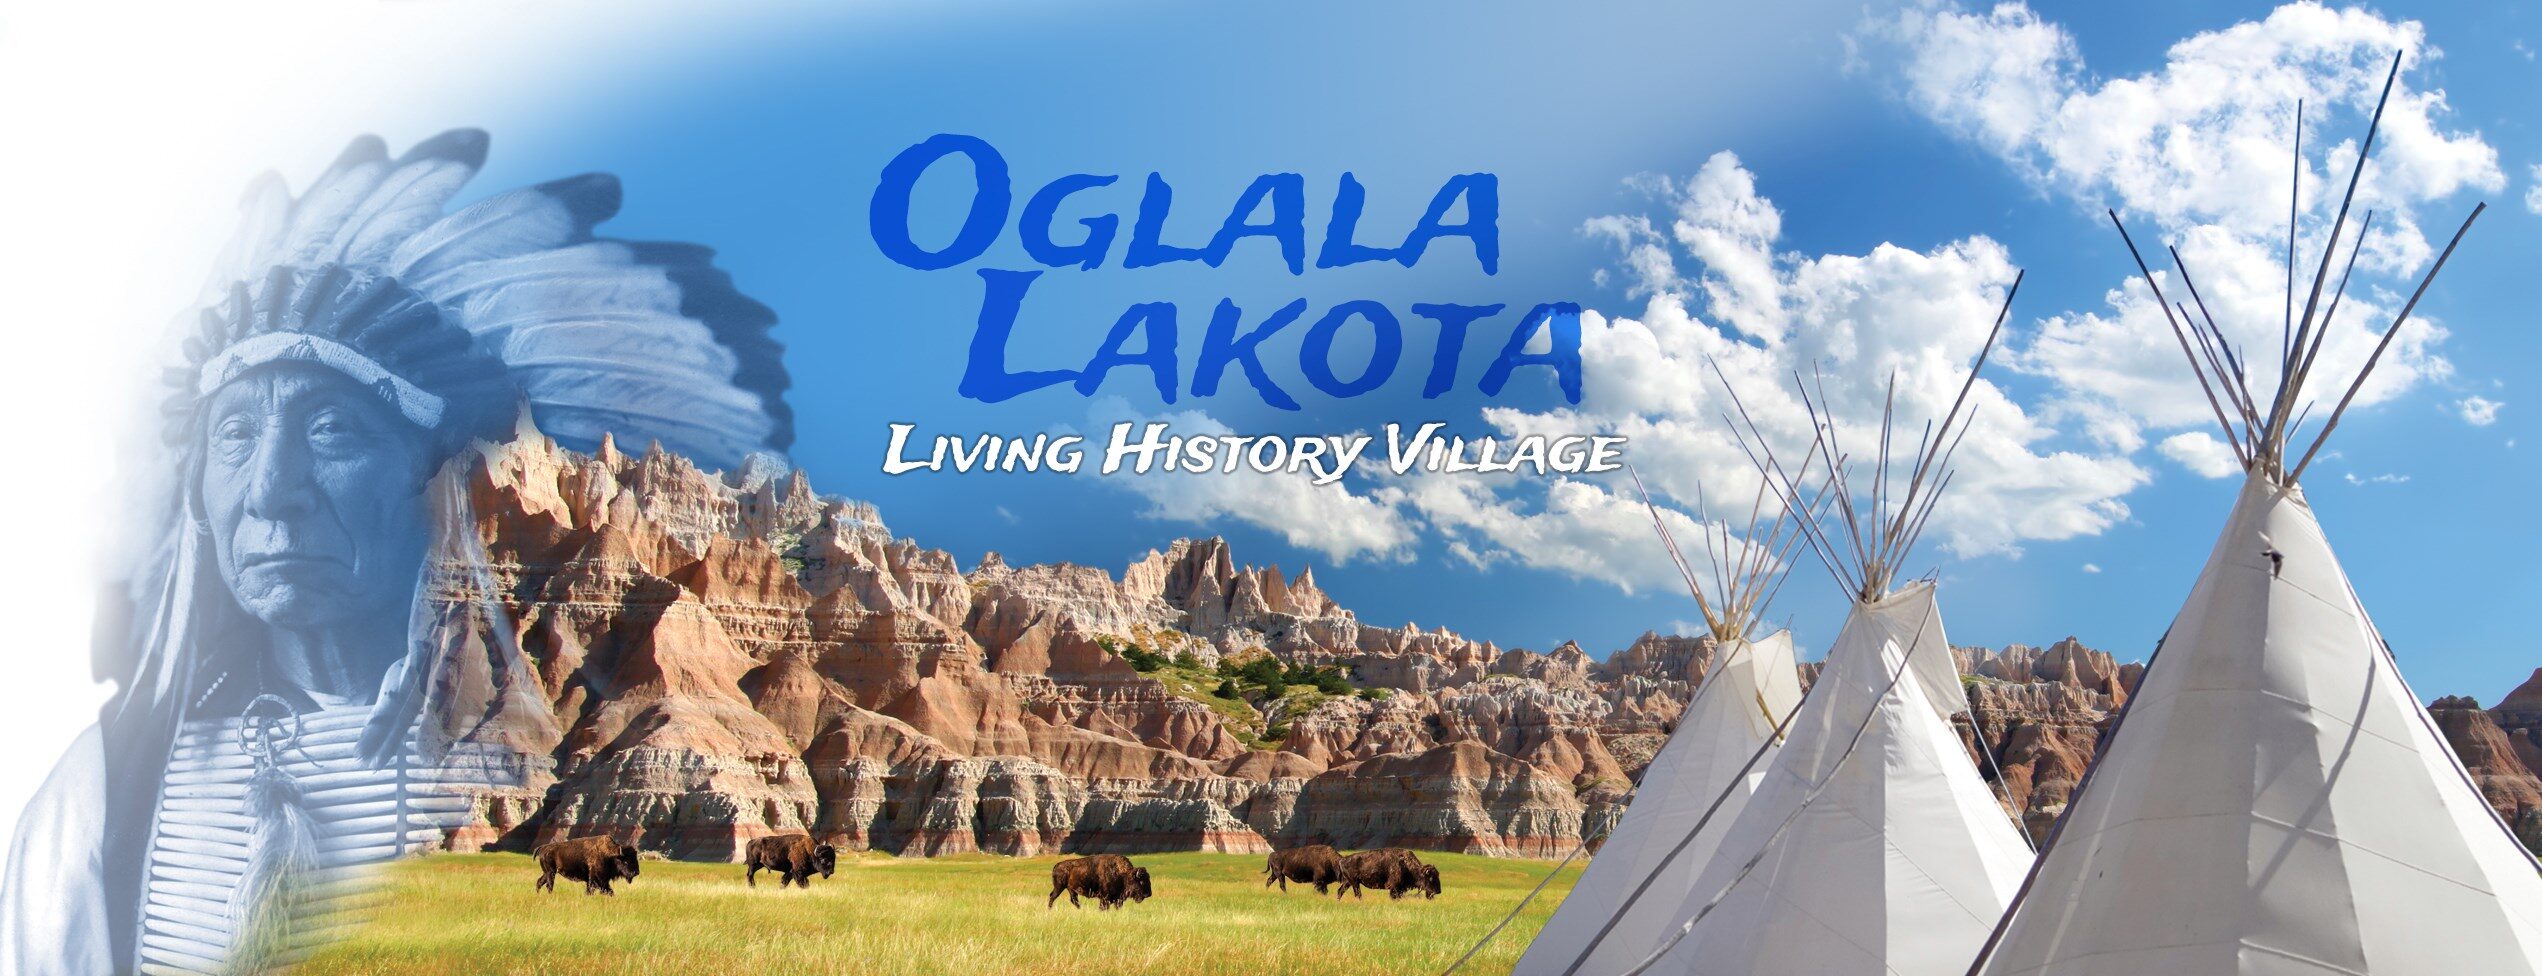 Oglala Lakota Living History Village